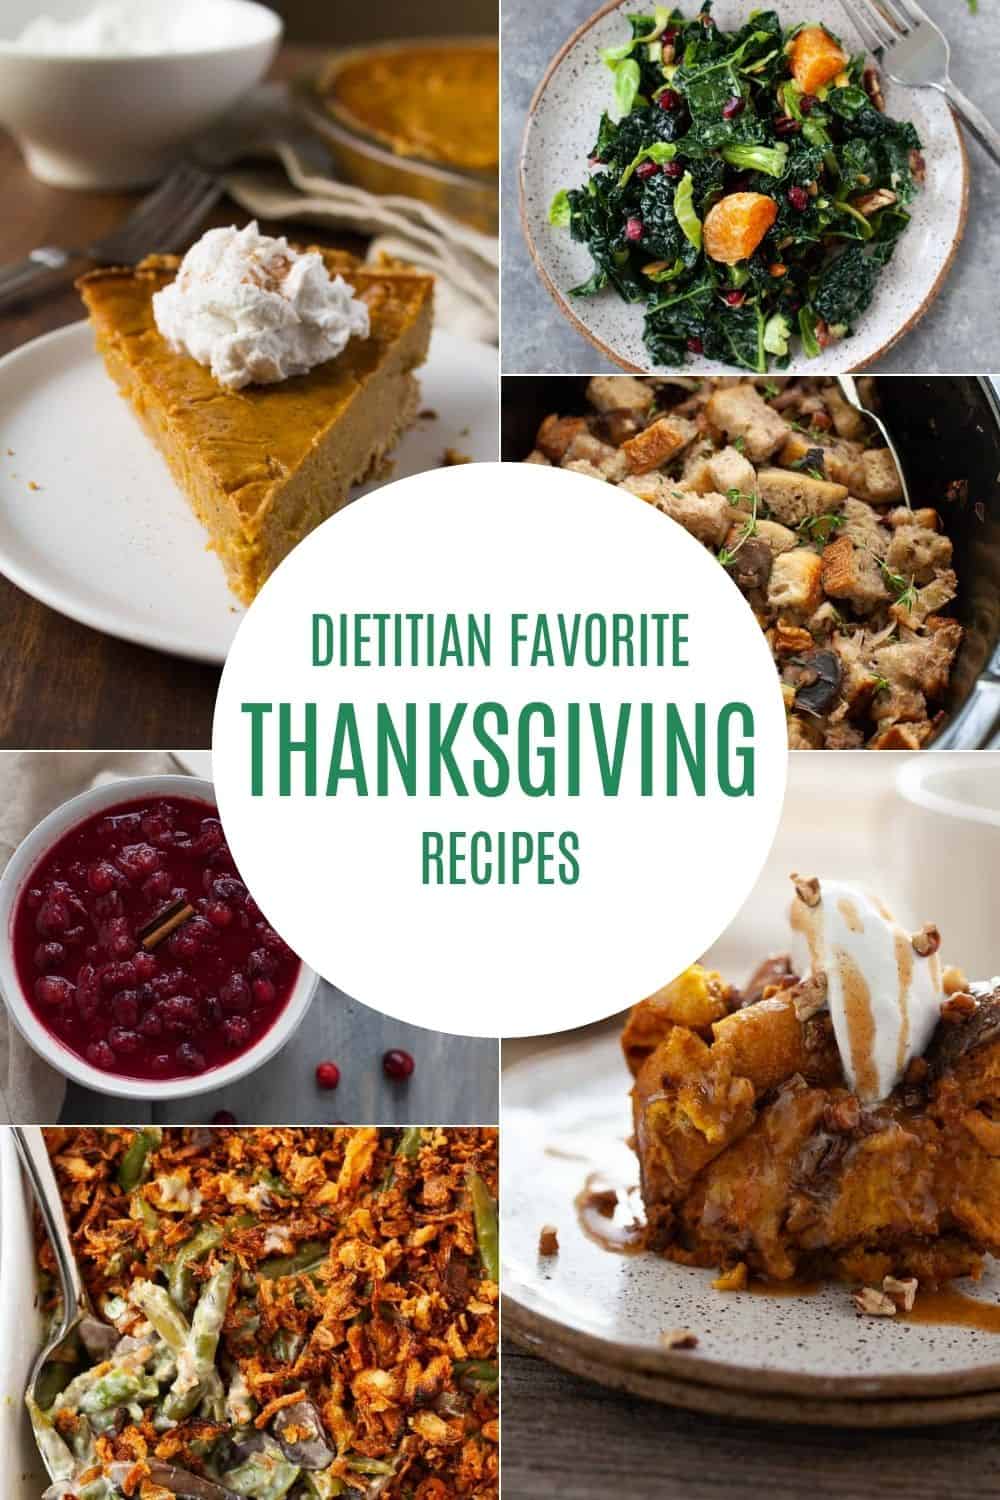 dietitian favorite thanksgiving recipes pin 2